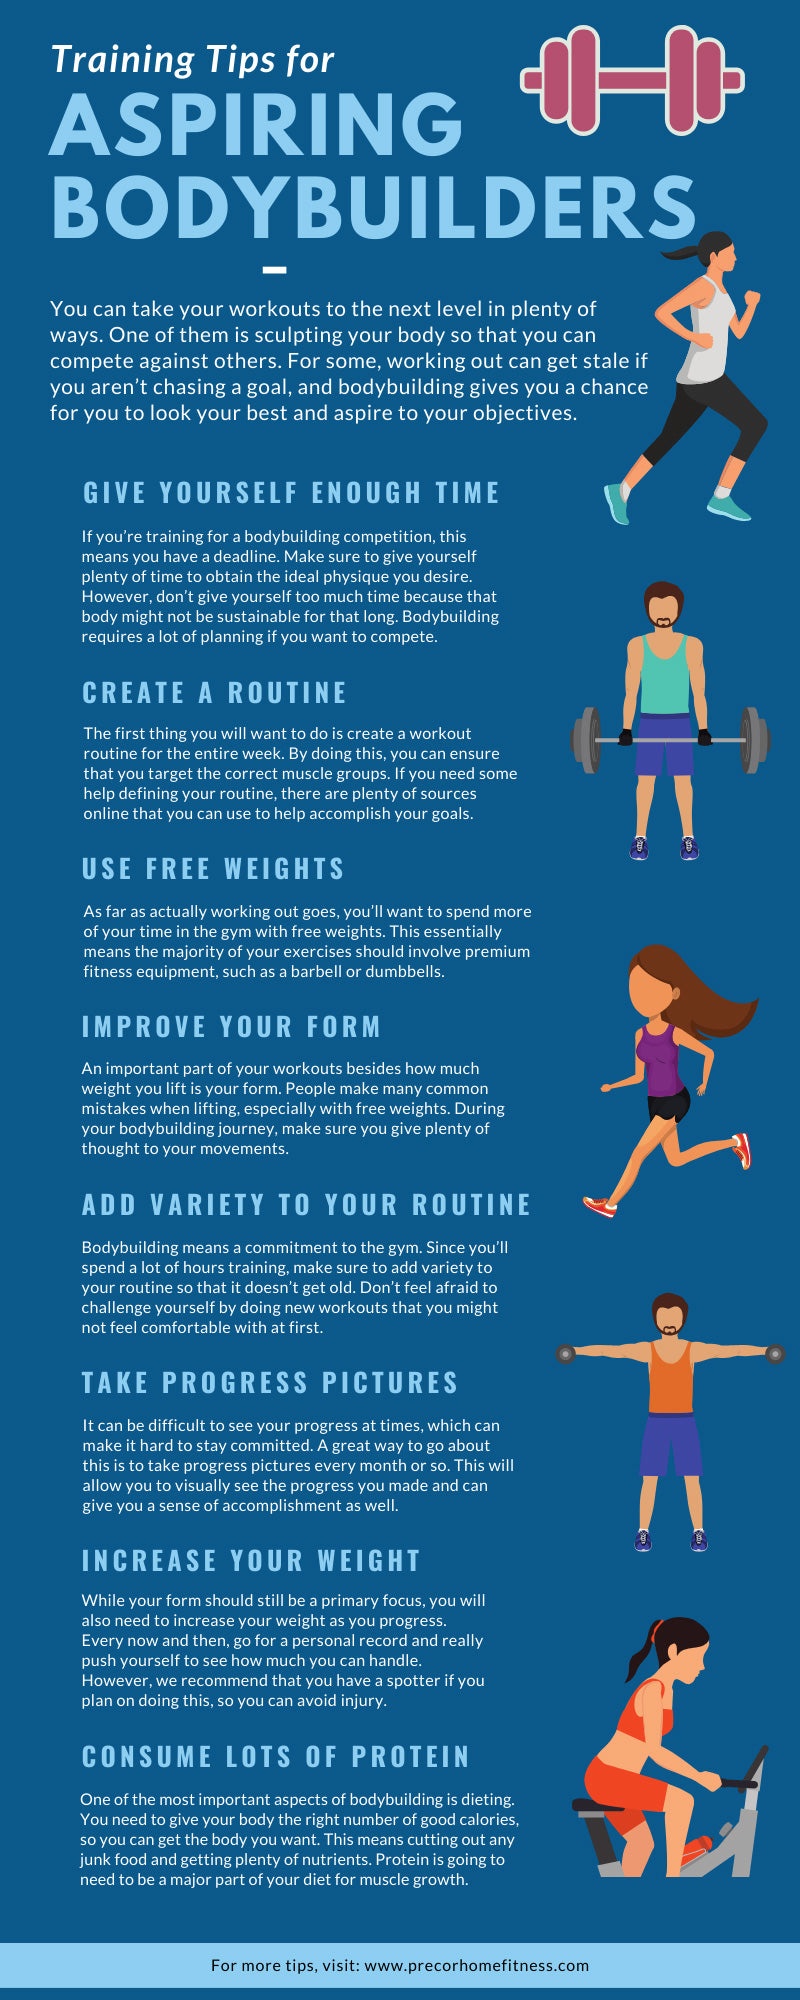 14 Training Tips for Aspiring Bodybuilders infographic